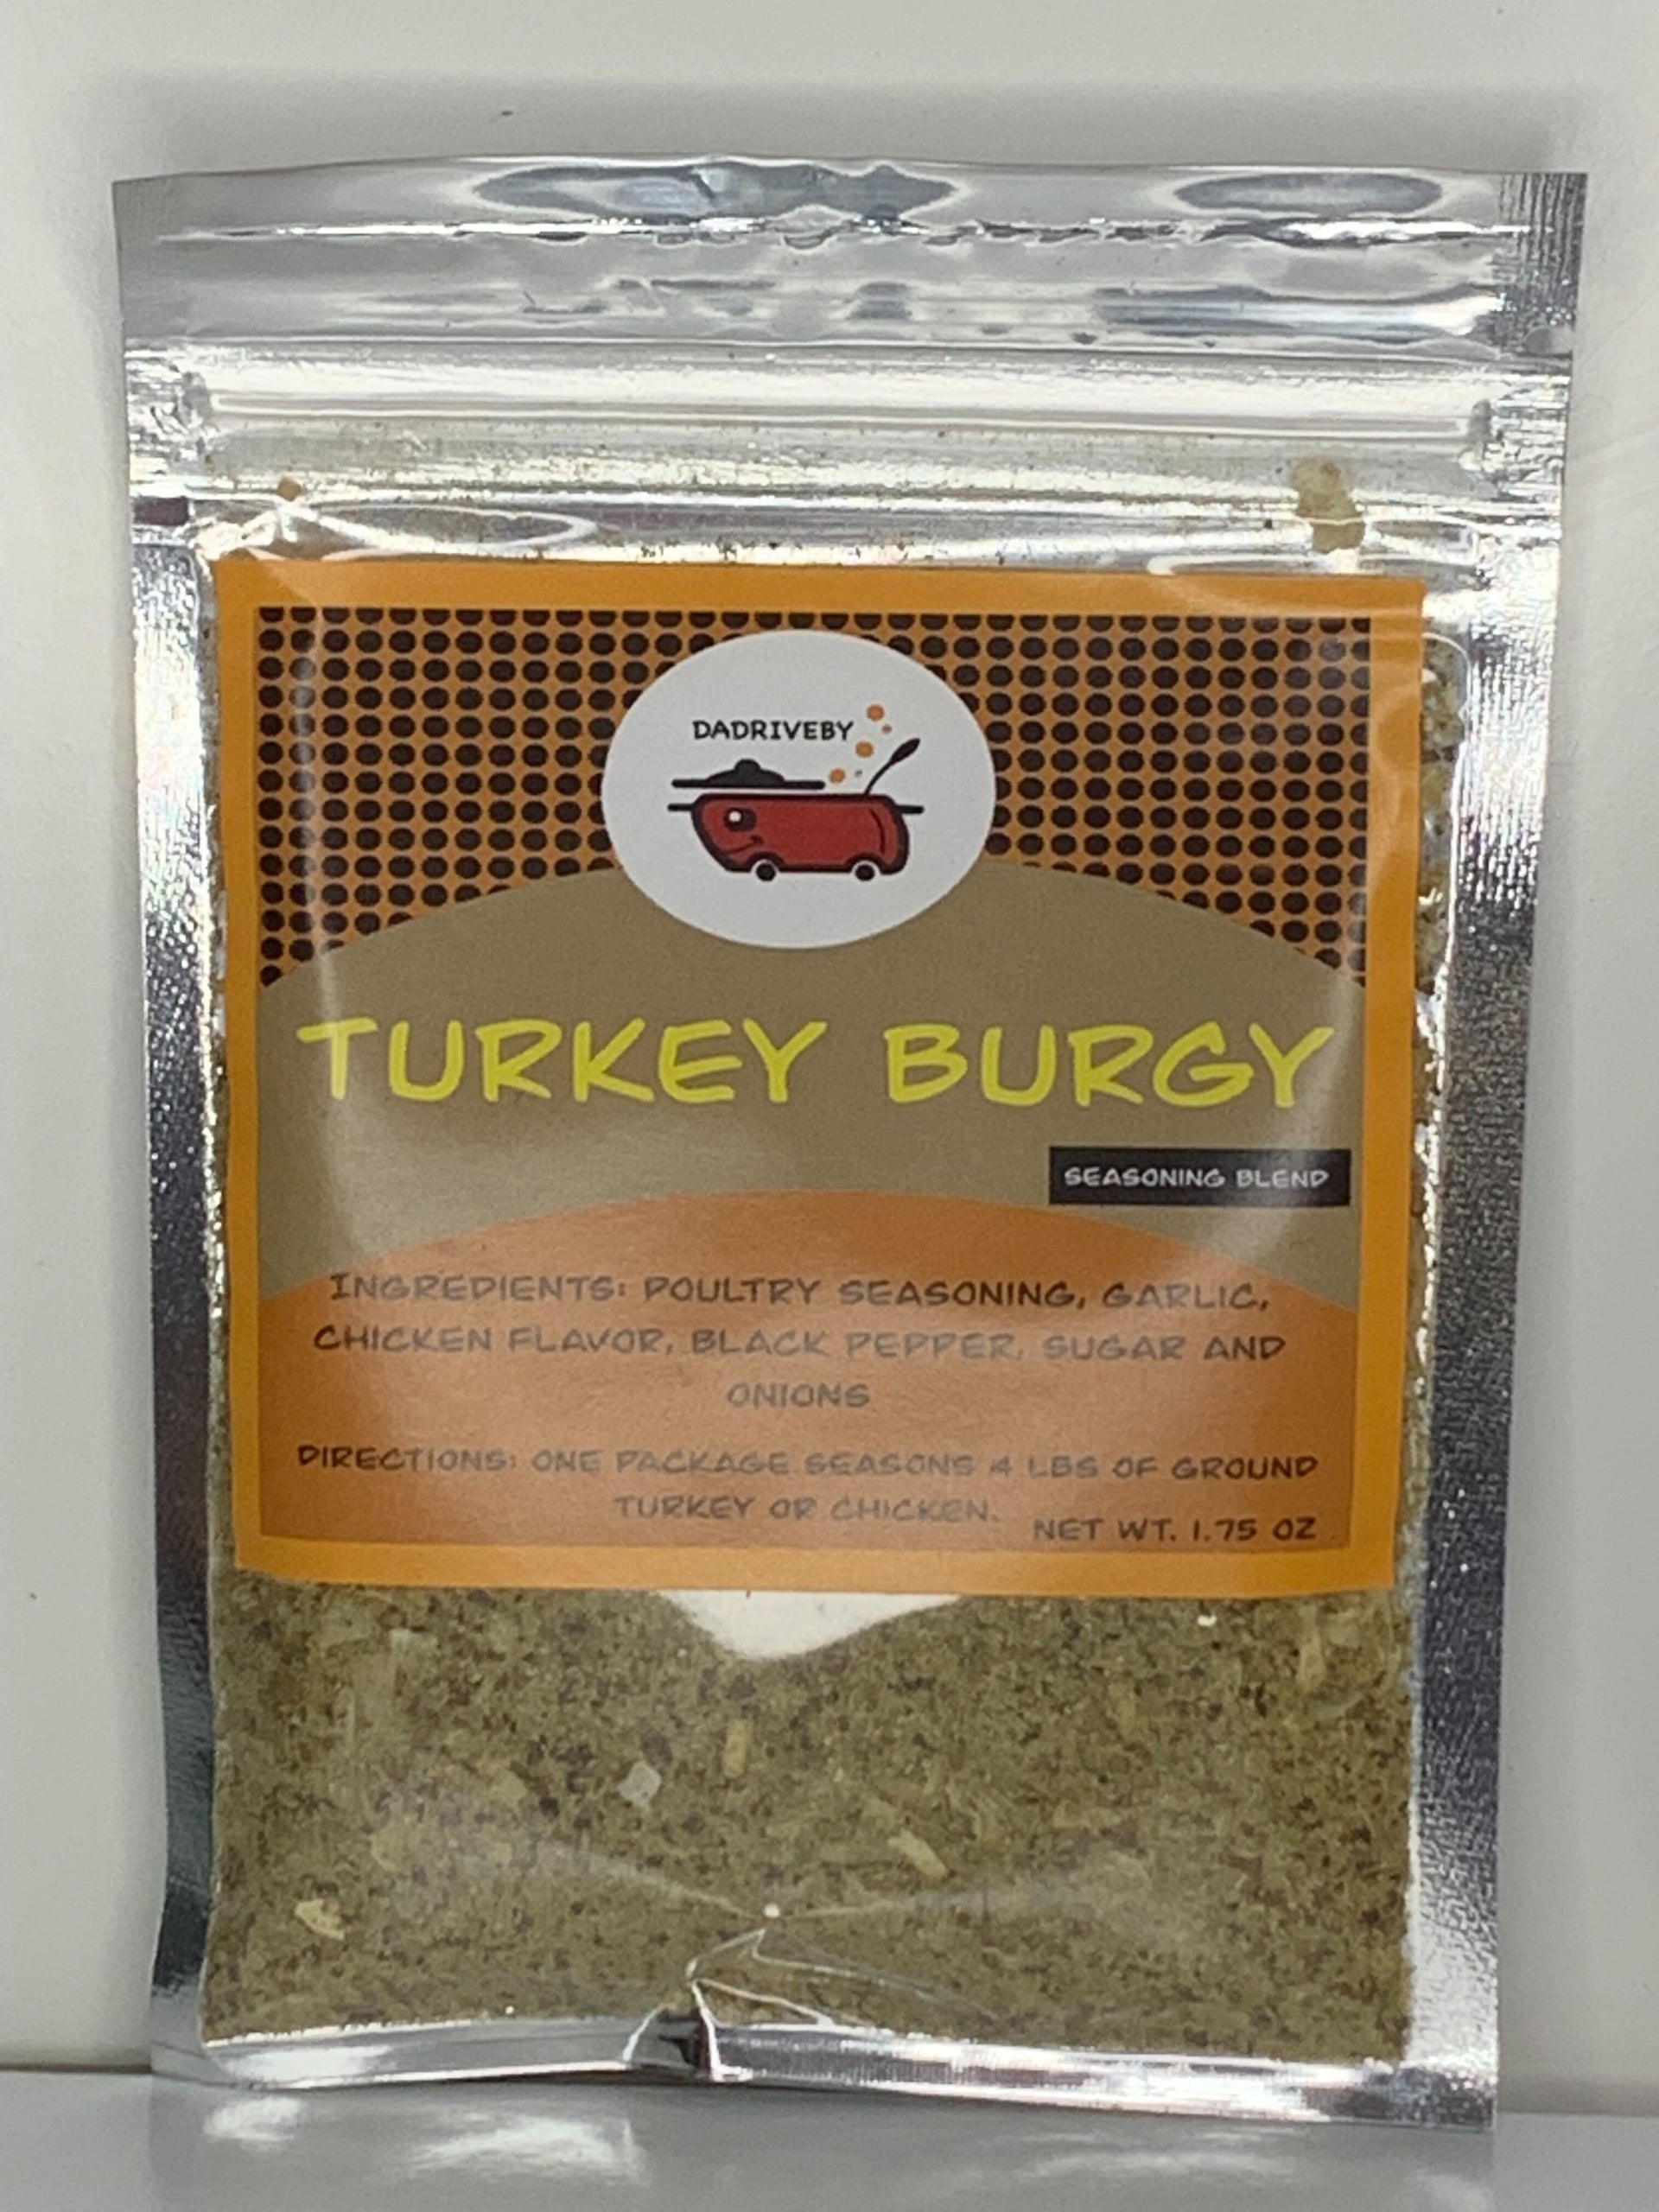 Load video: How To make Da Turkey Burgy